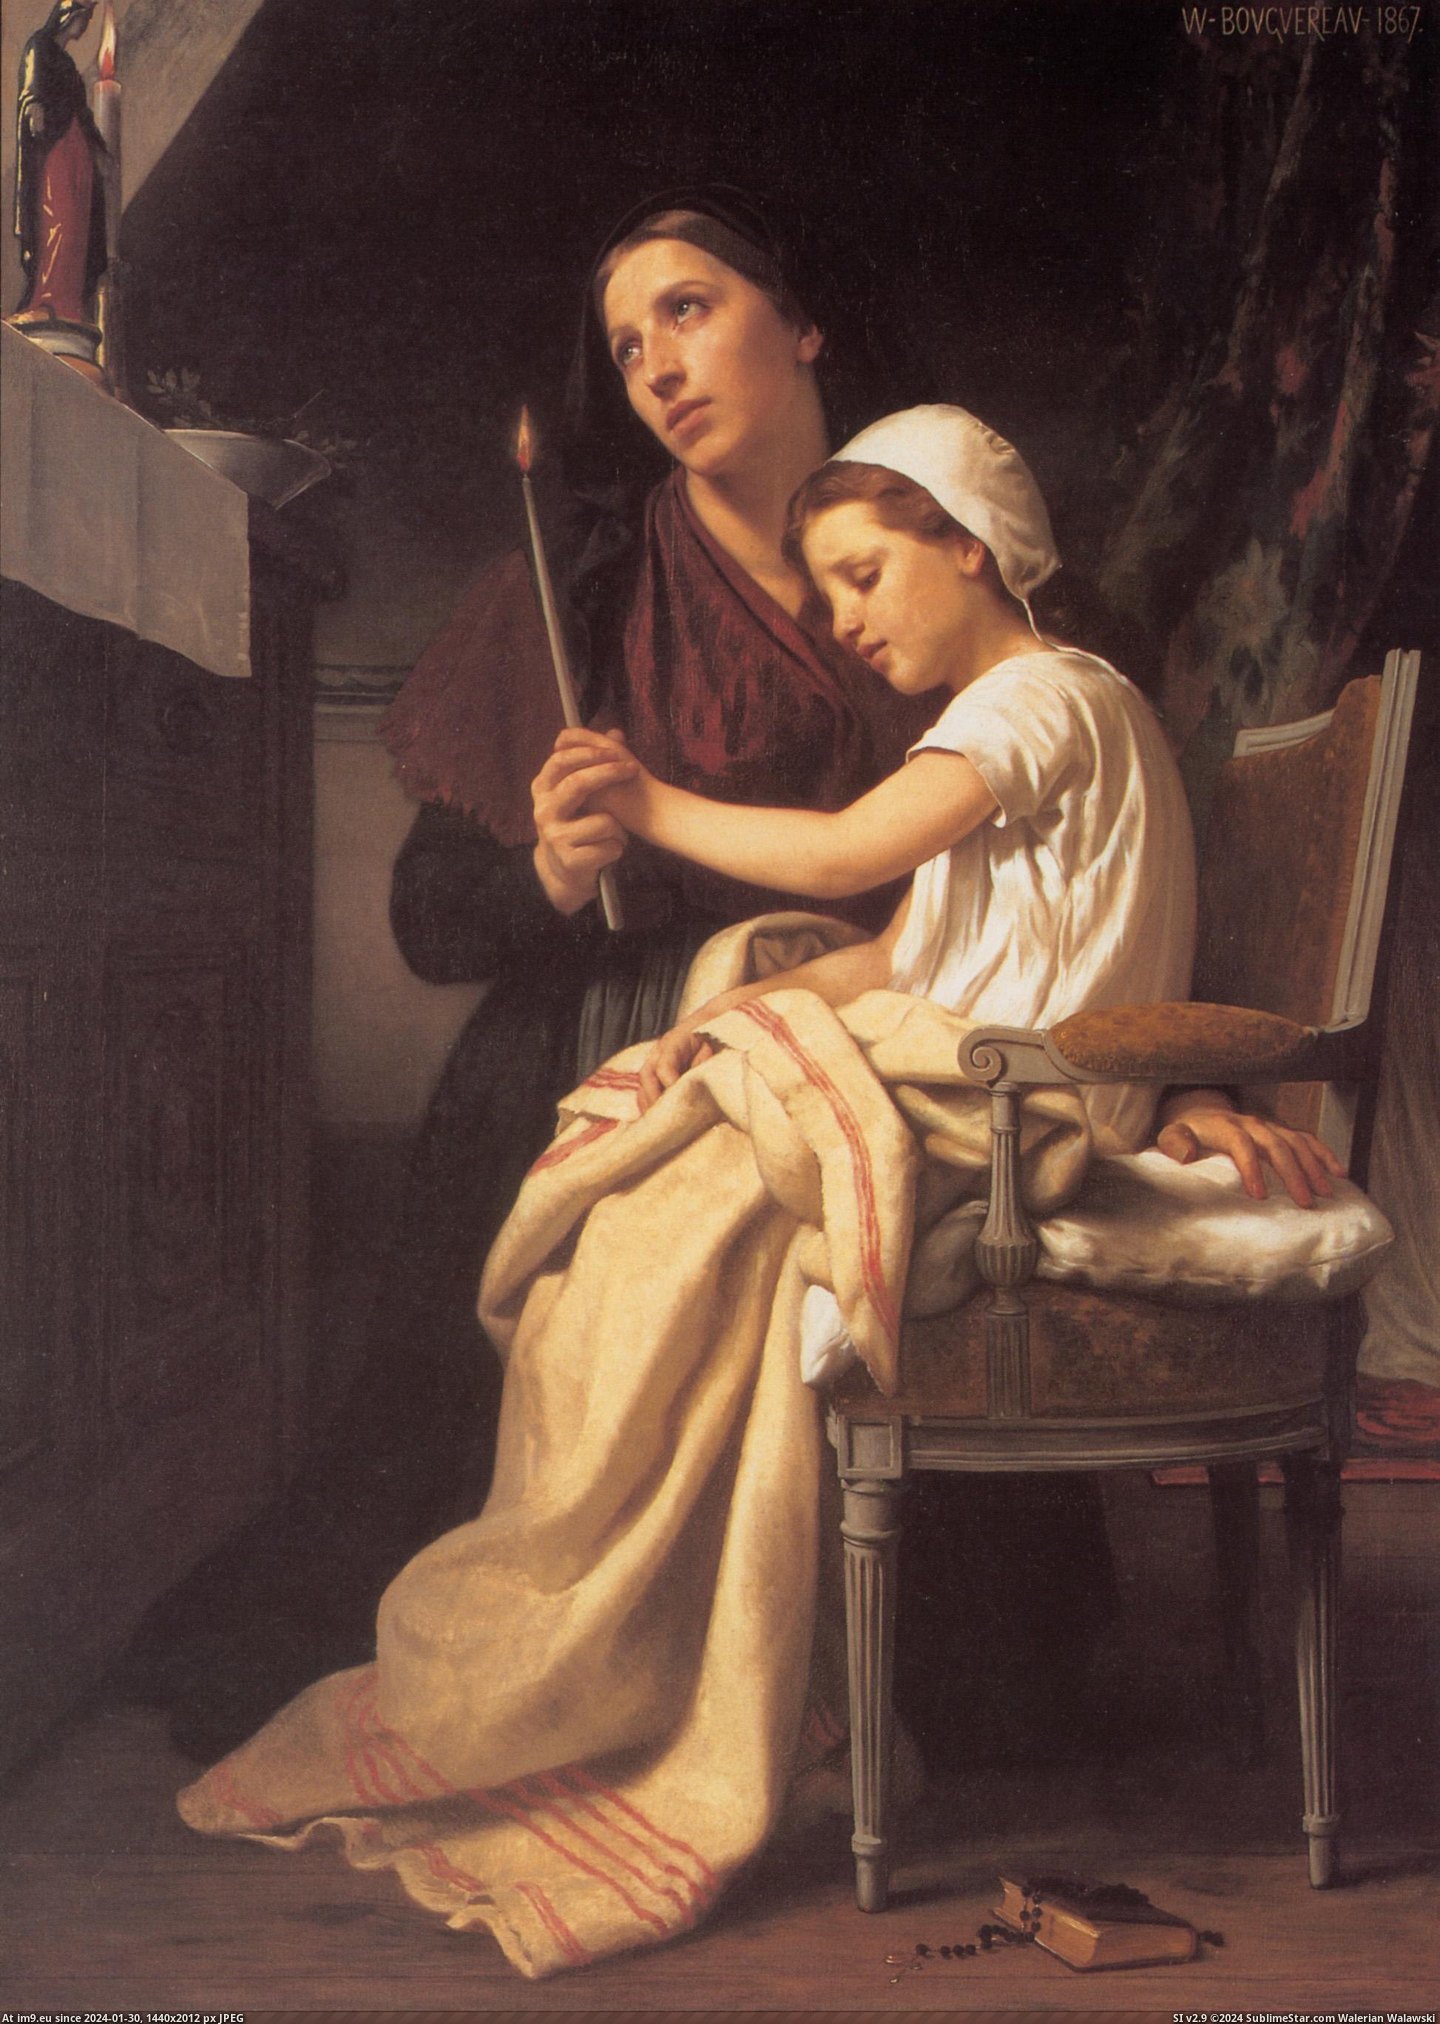 (1867) Le Voeu - William Adolphe Bouguereau (in William Adolphe Bouguereau paintings (1825-1905))